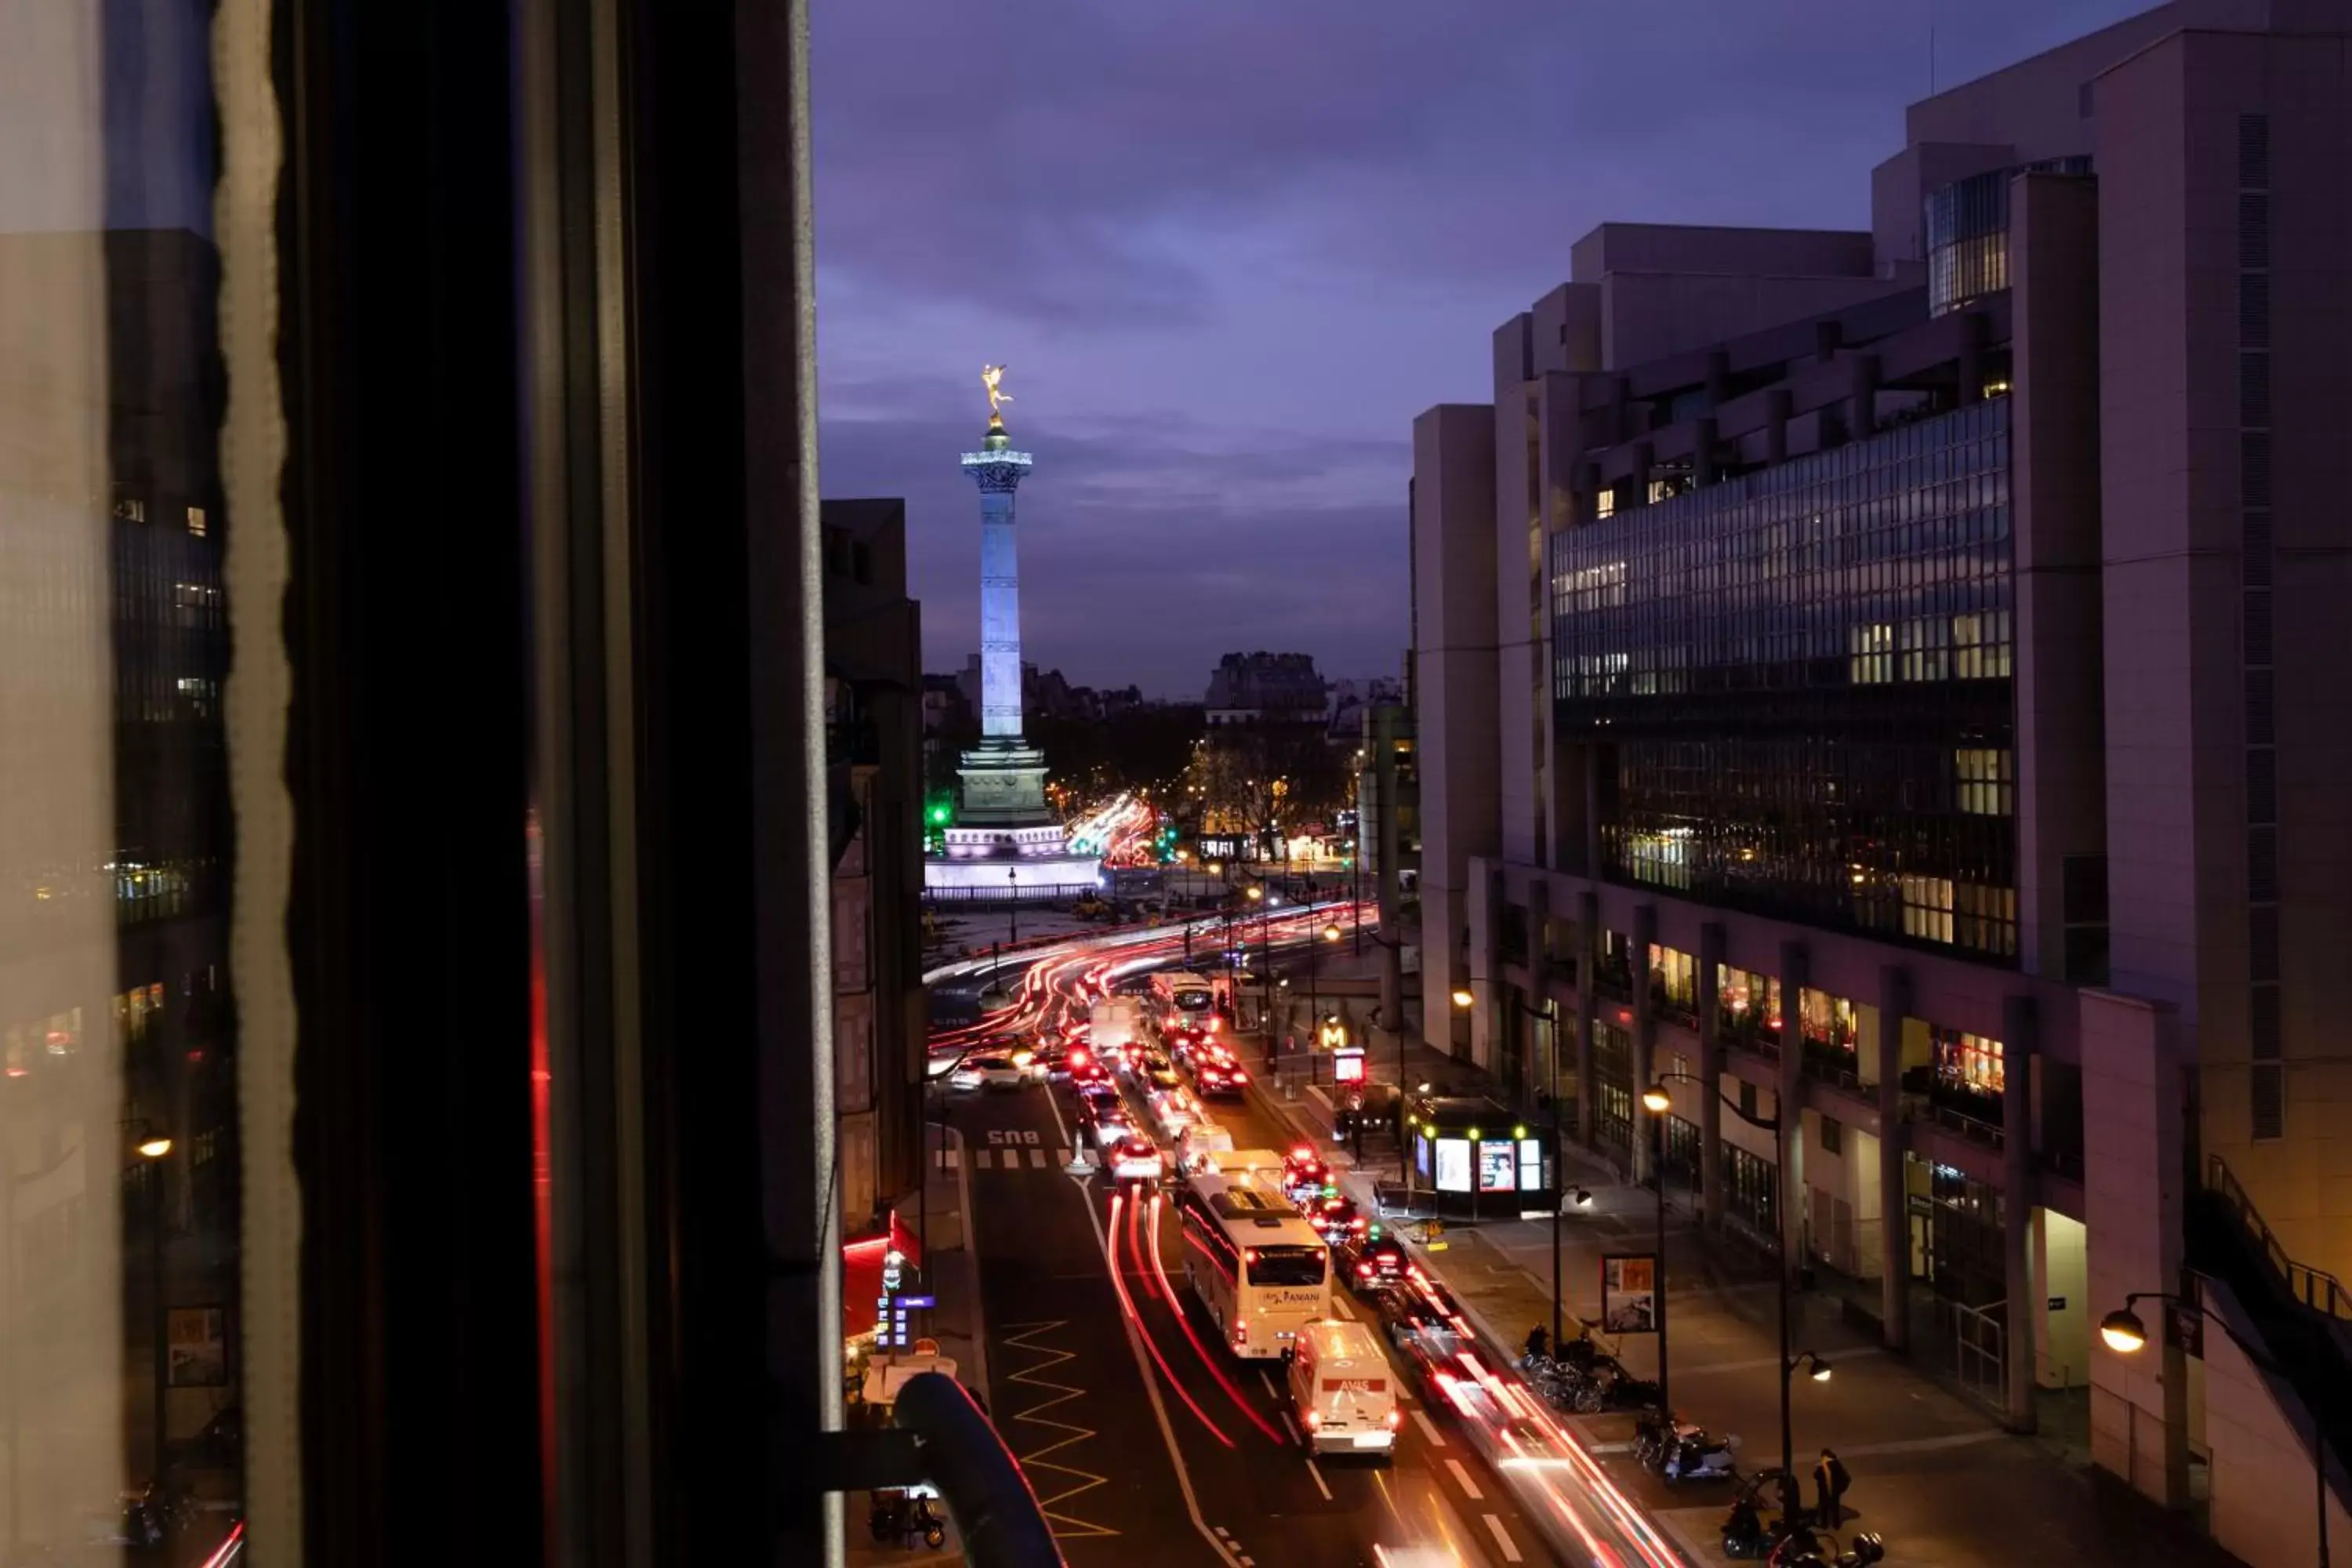 City view in Paris Bastille